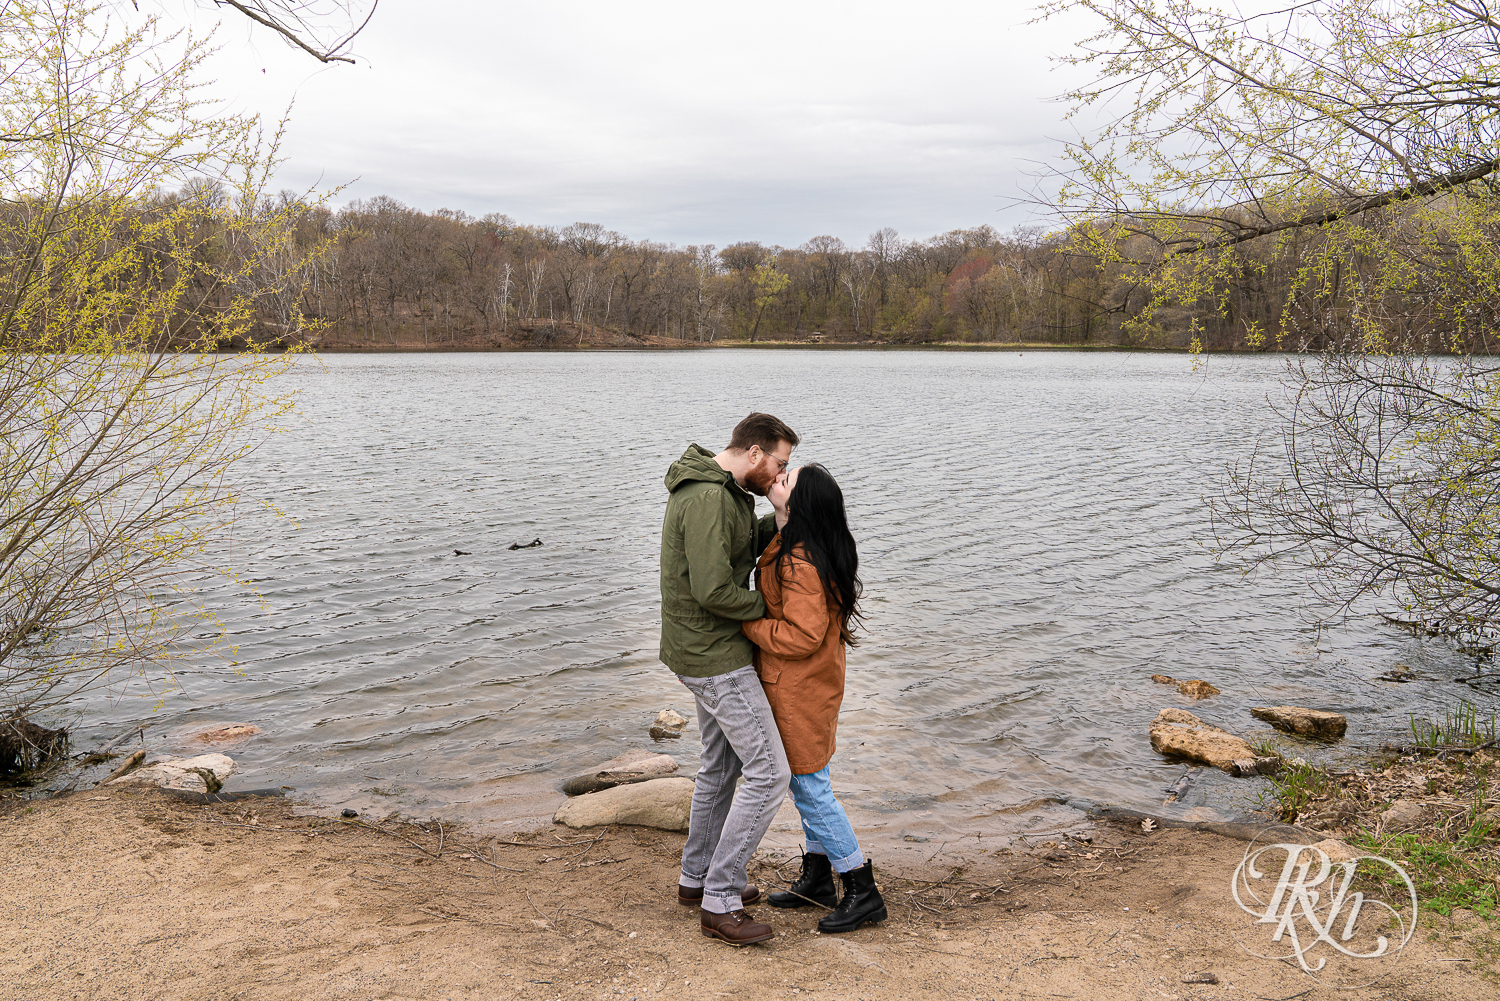 Man and woman in jackets kiss on beach at Lebanon Hills Regional Park in Eagan, Minnesota. 